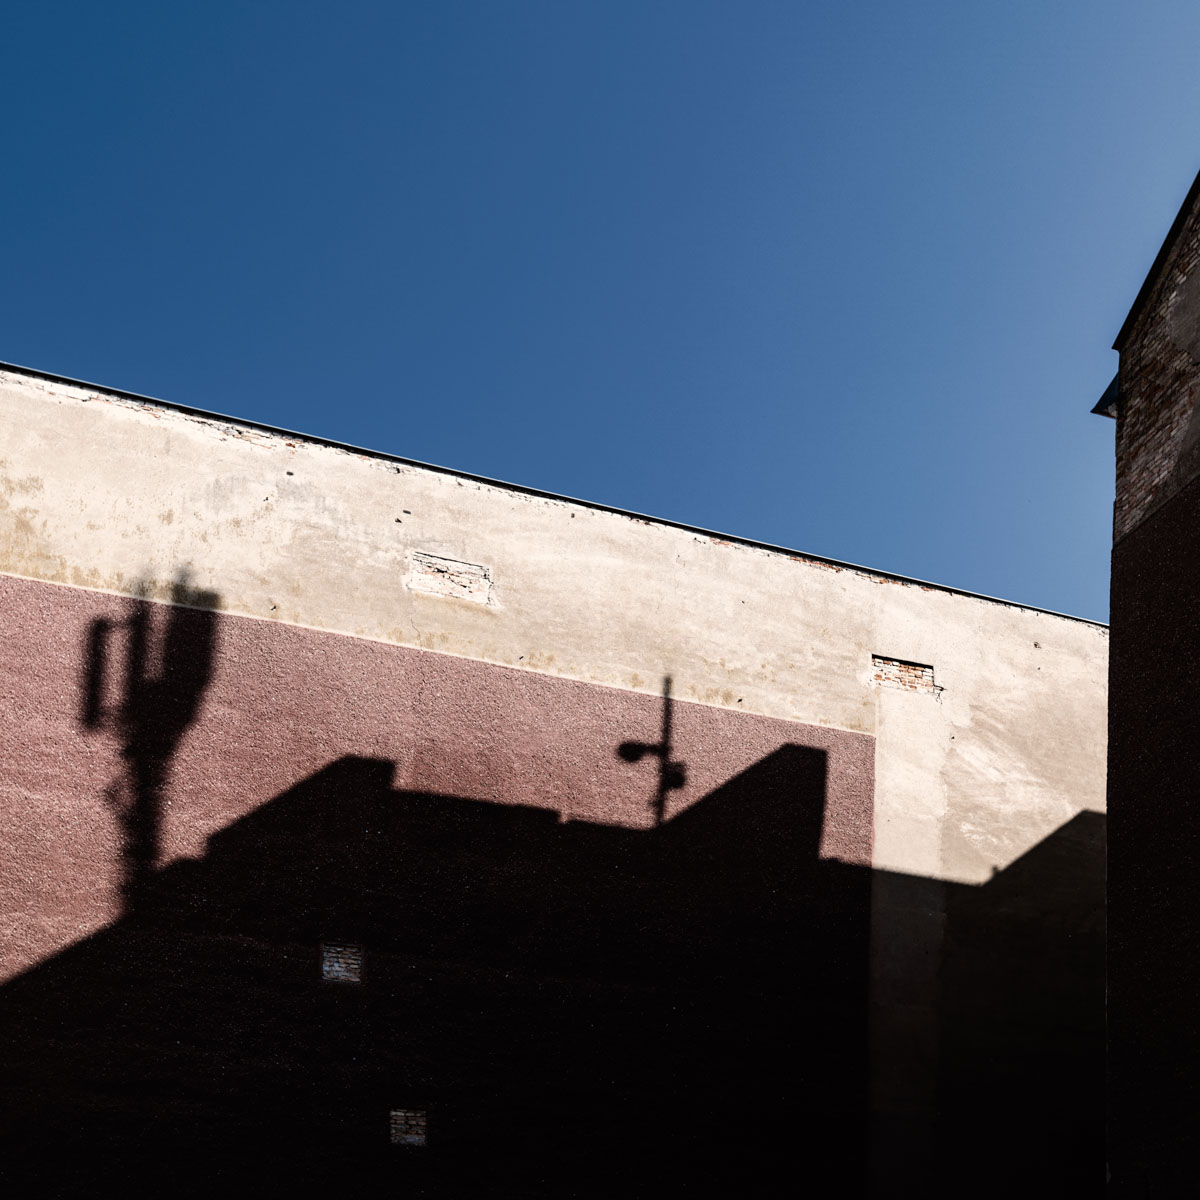 shadows of a building and a blue sky